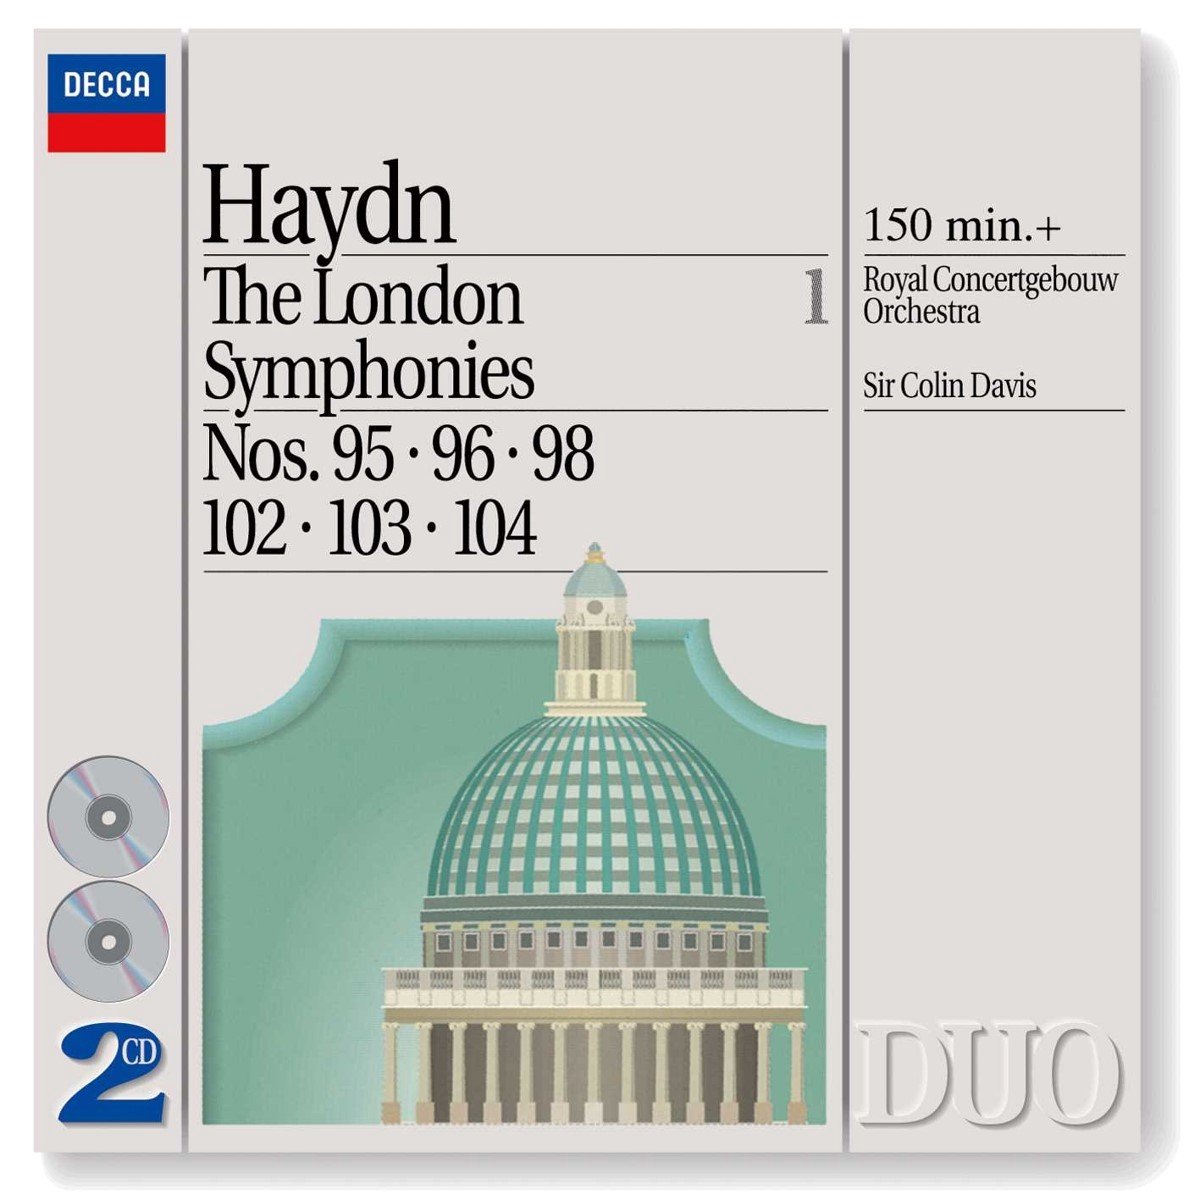 Royal Concertgebouw Orchestra, Sir Colin Davis - Haydn: The London Symphonies - Nos. 95, 96, 98 & 1 (2 CD) - Royal Concertgebouw Orchestra, Sir Colin Davis